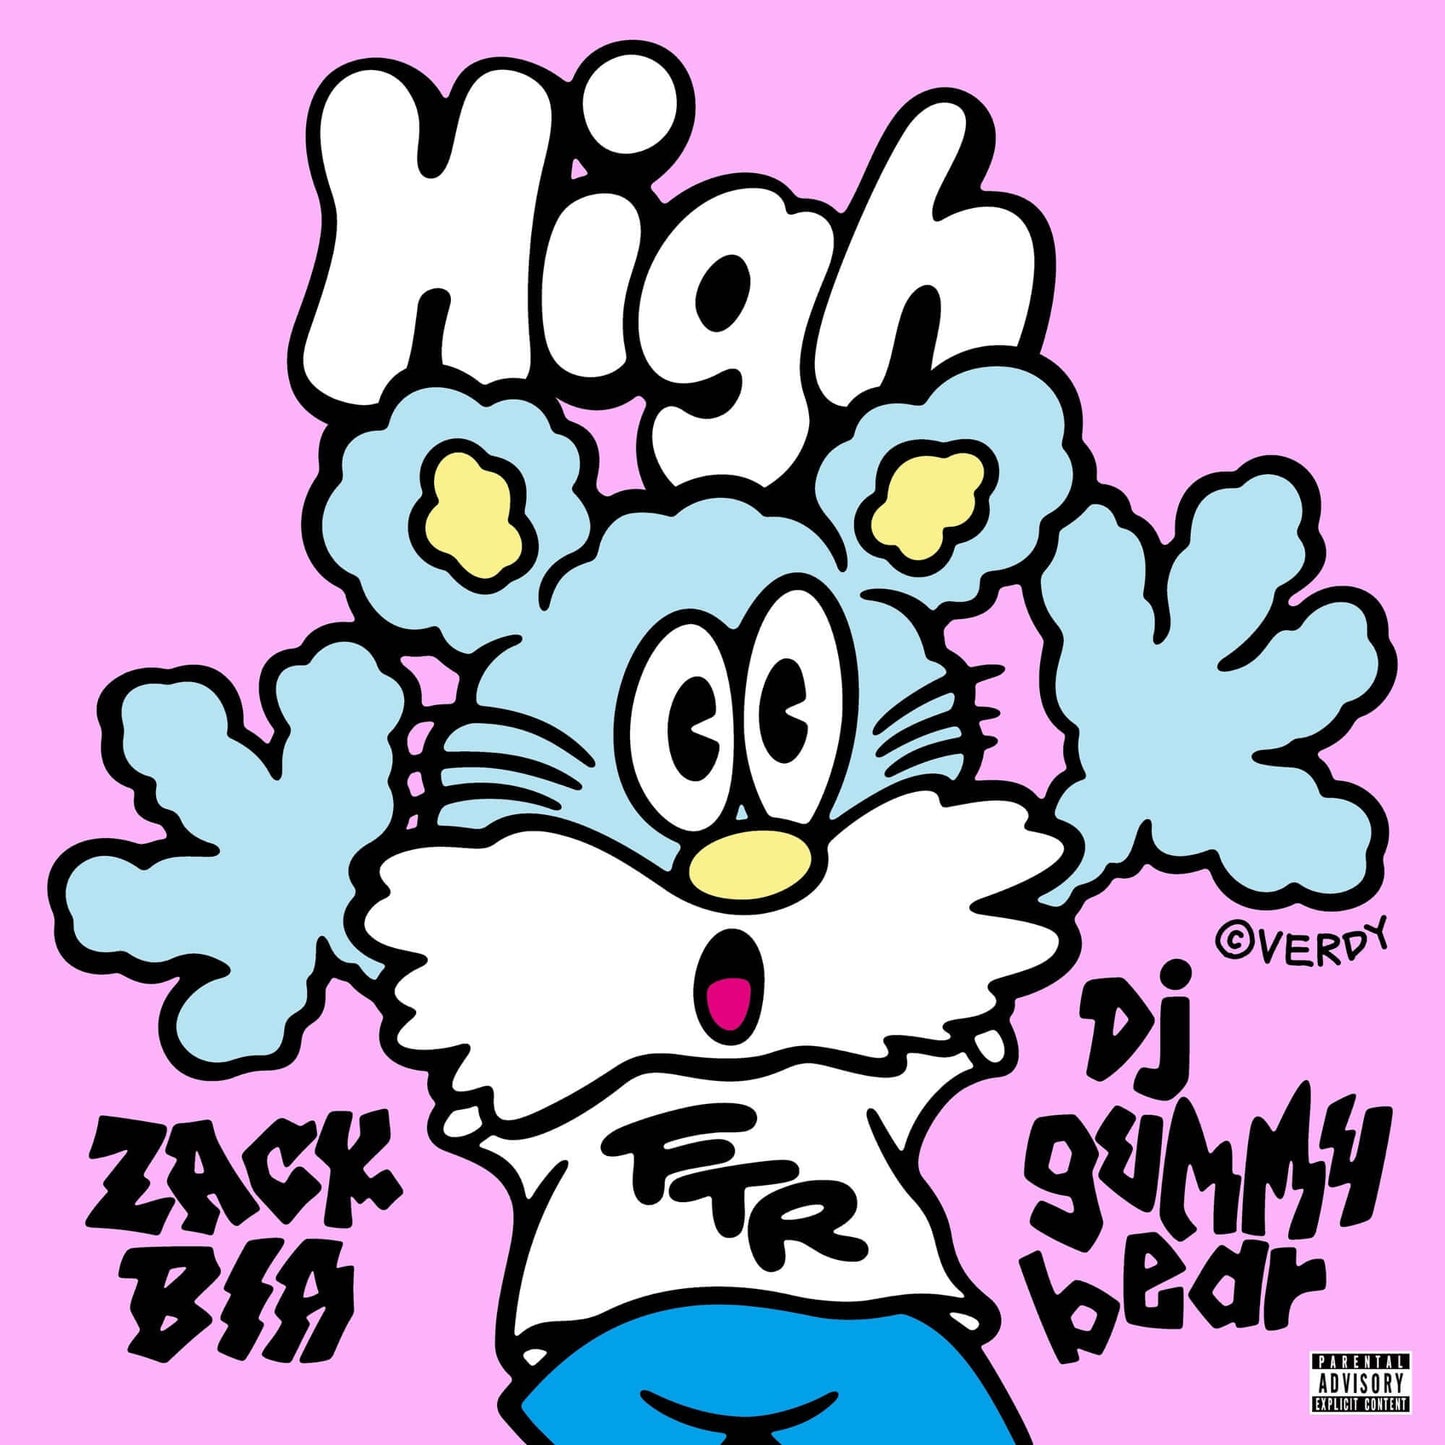 Zack Bia, dj gummy bear - High (Studio Acapella)